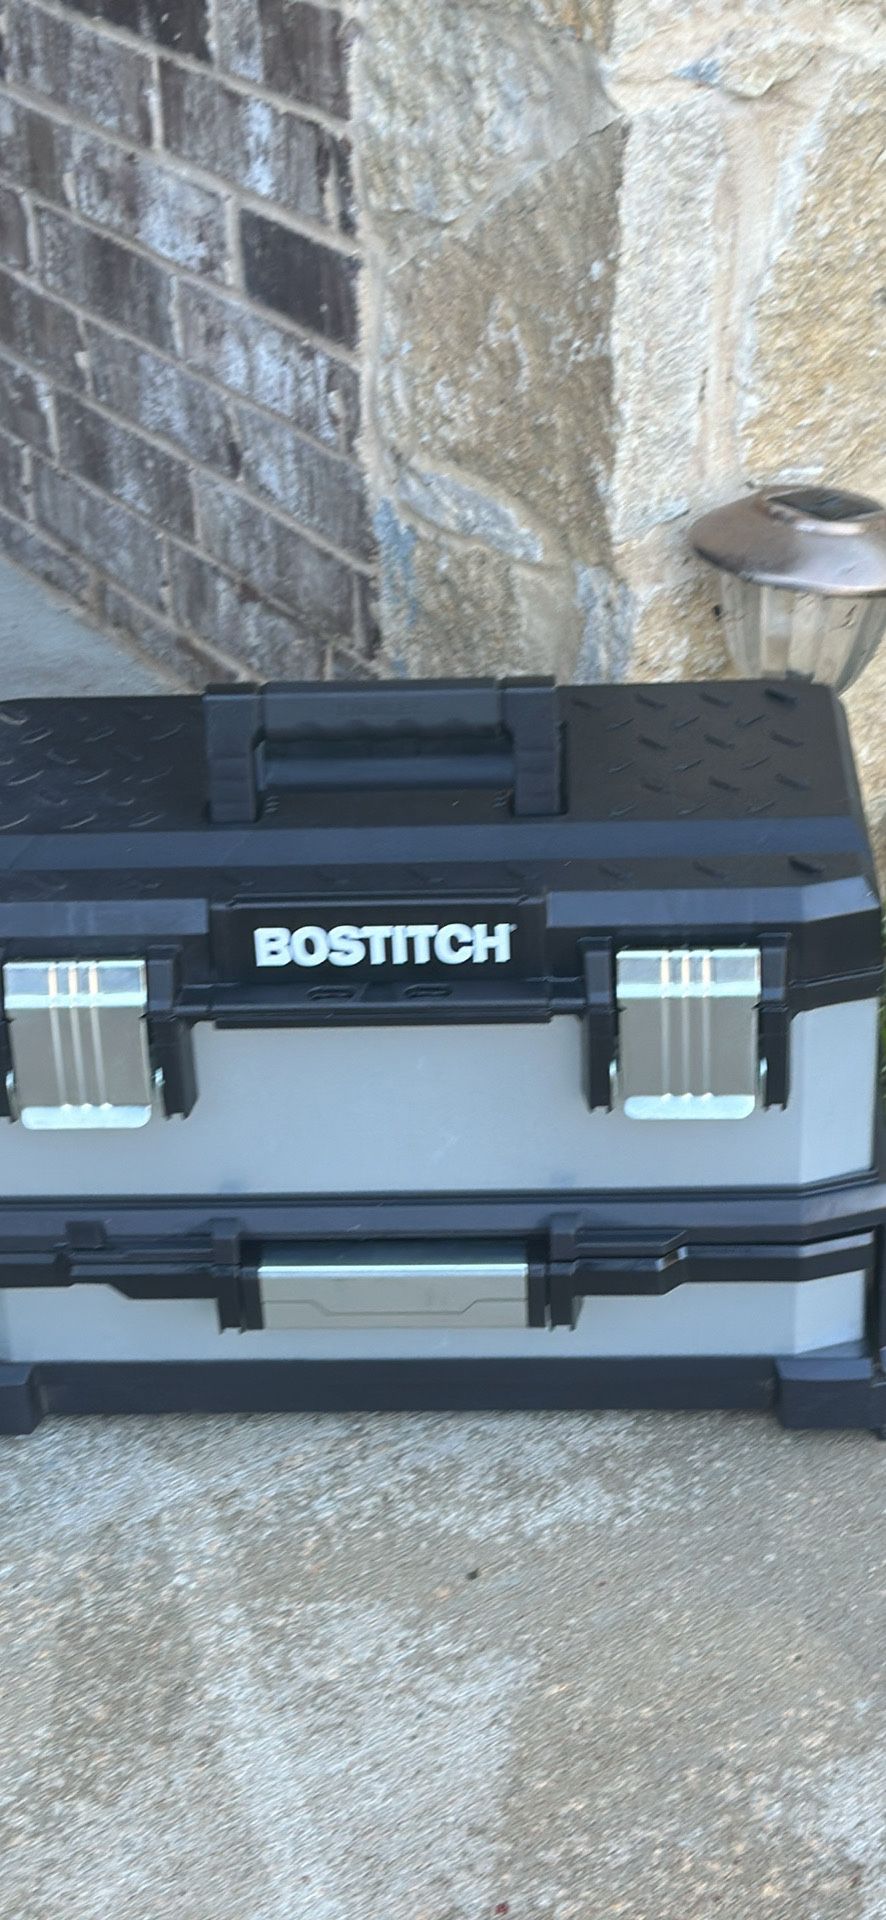 BOSTITCH TOOL BOX LIKE NEW $50 SERIOUS BUYERS